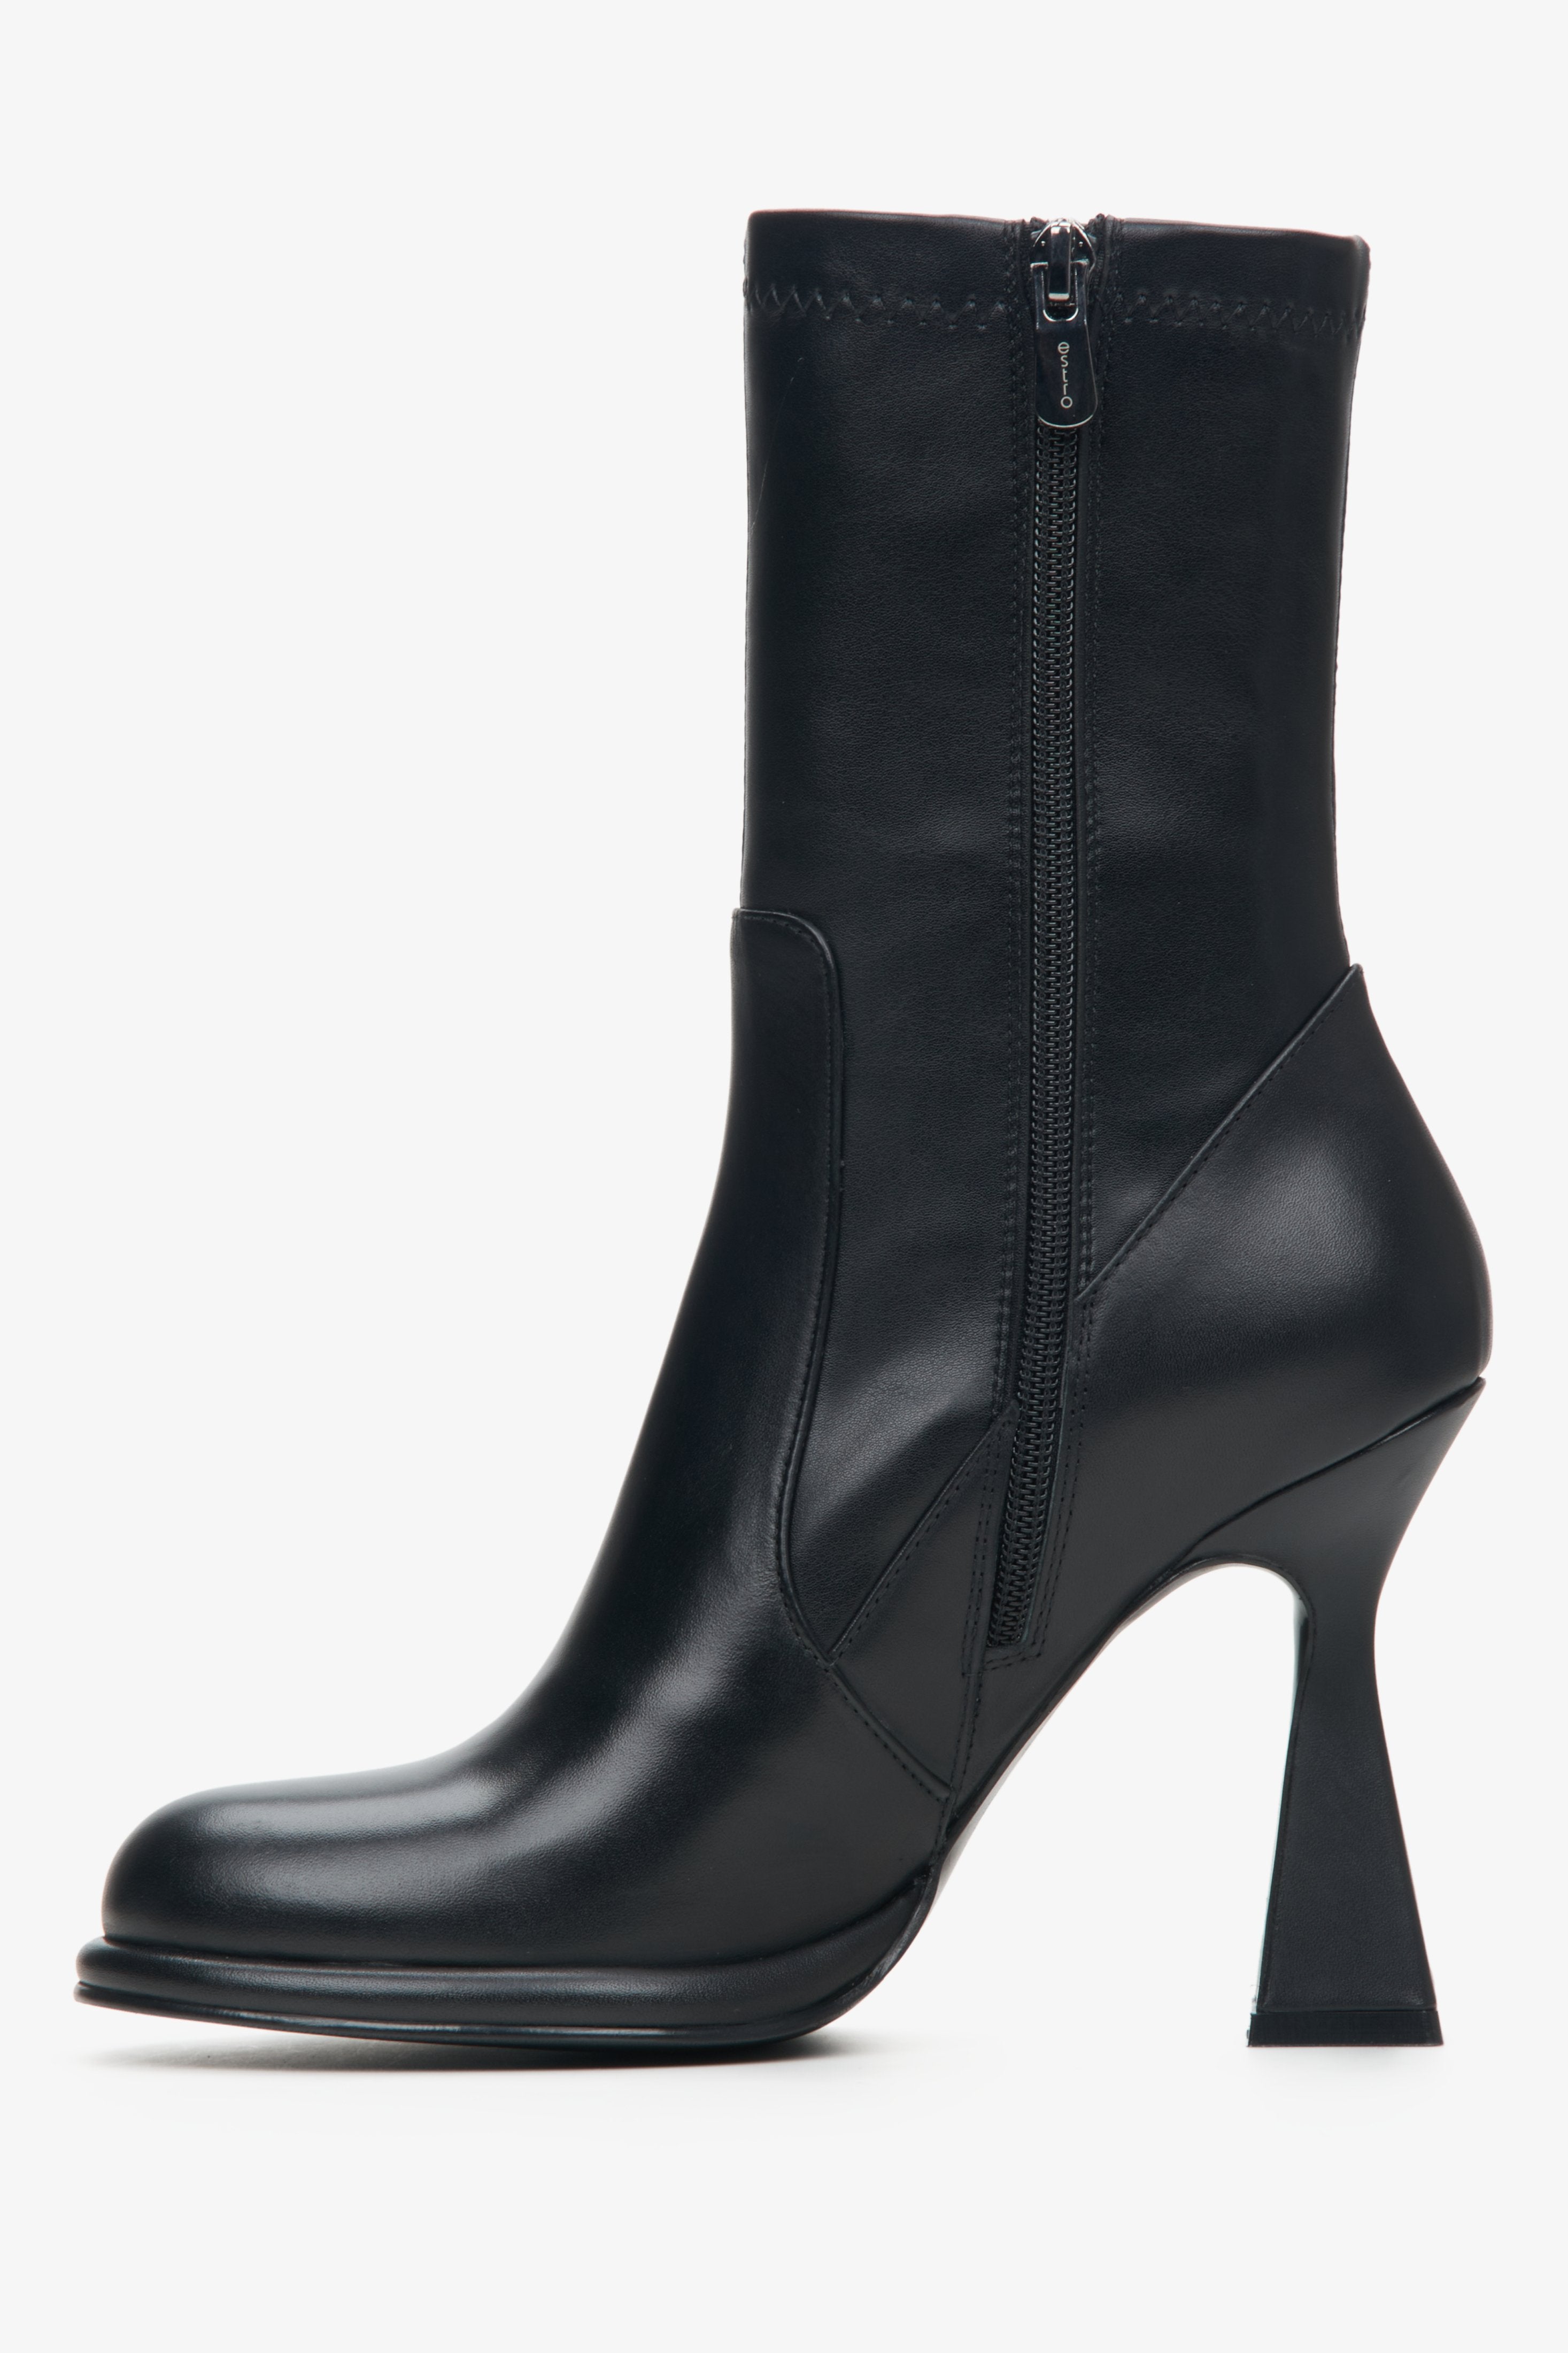 Skórzane czarne botki damskie na obcasie Estro - profil buta.